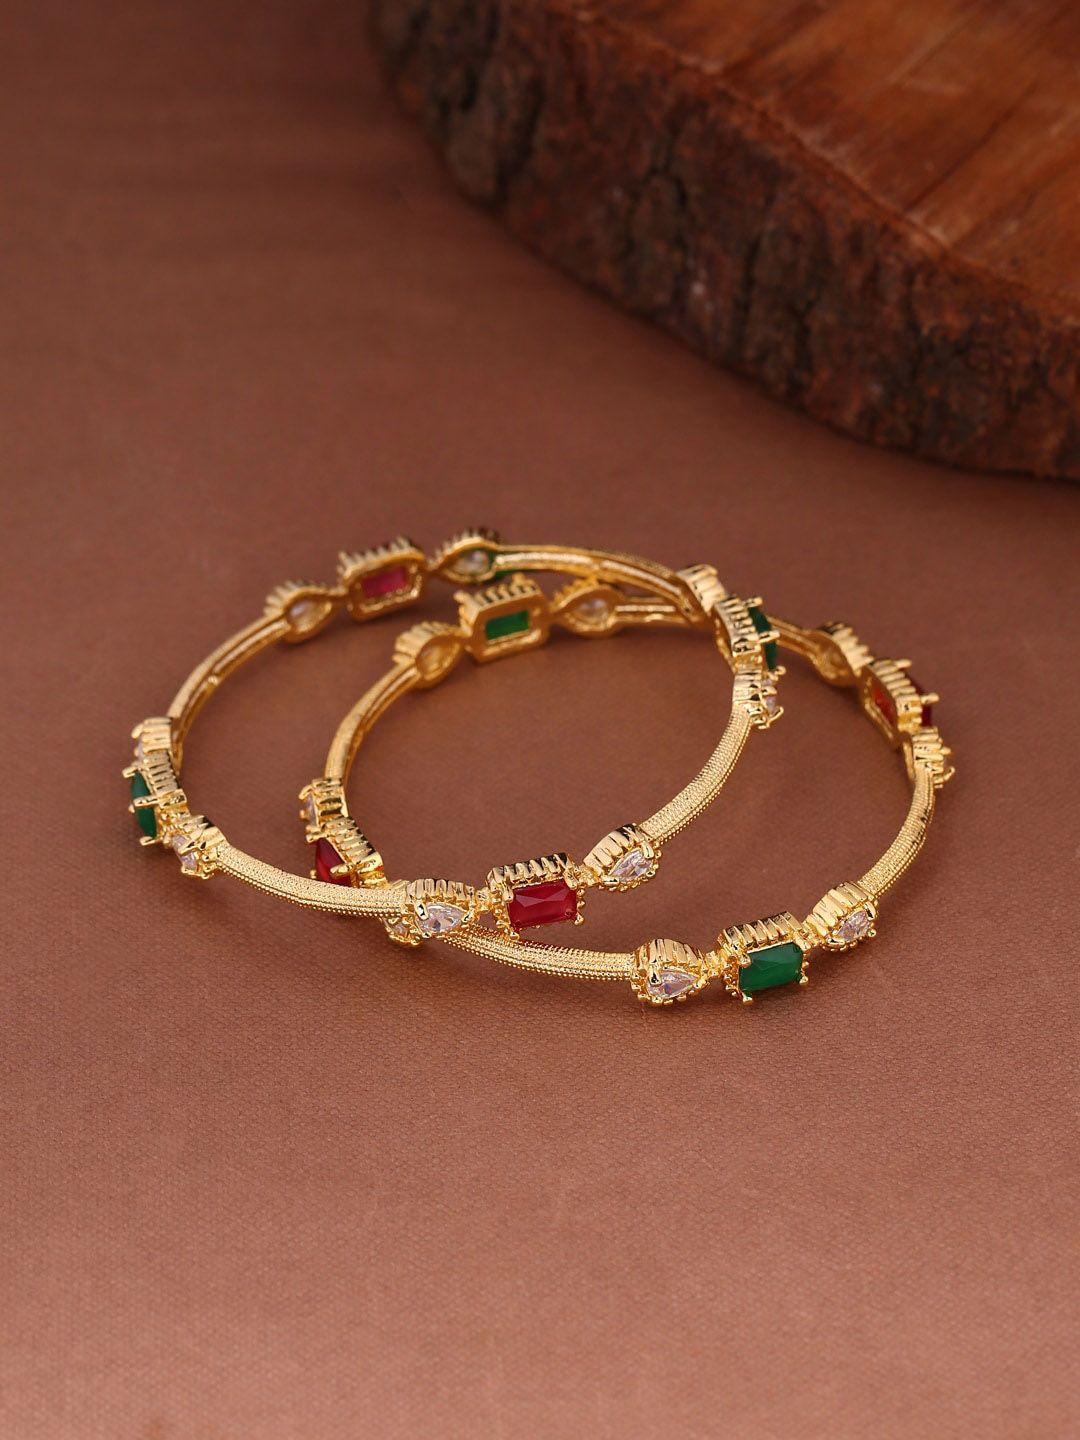 shoshaa set of 2 gold-plated stone-studded bangles